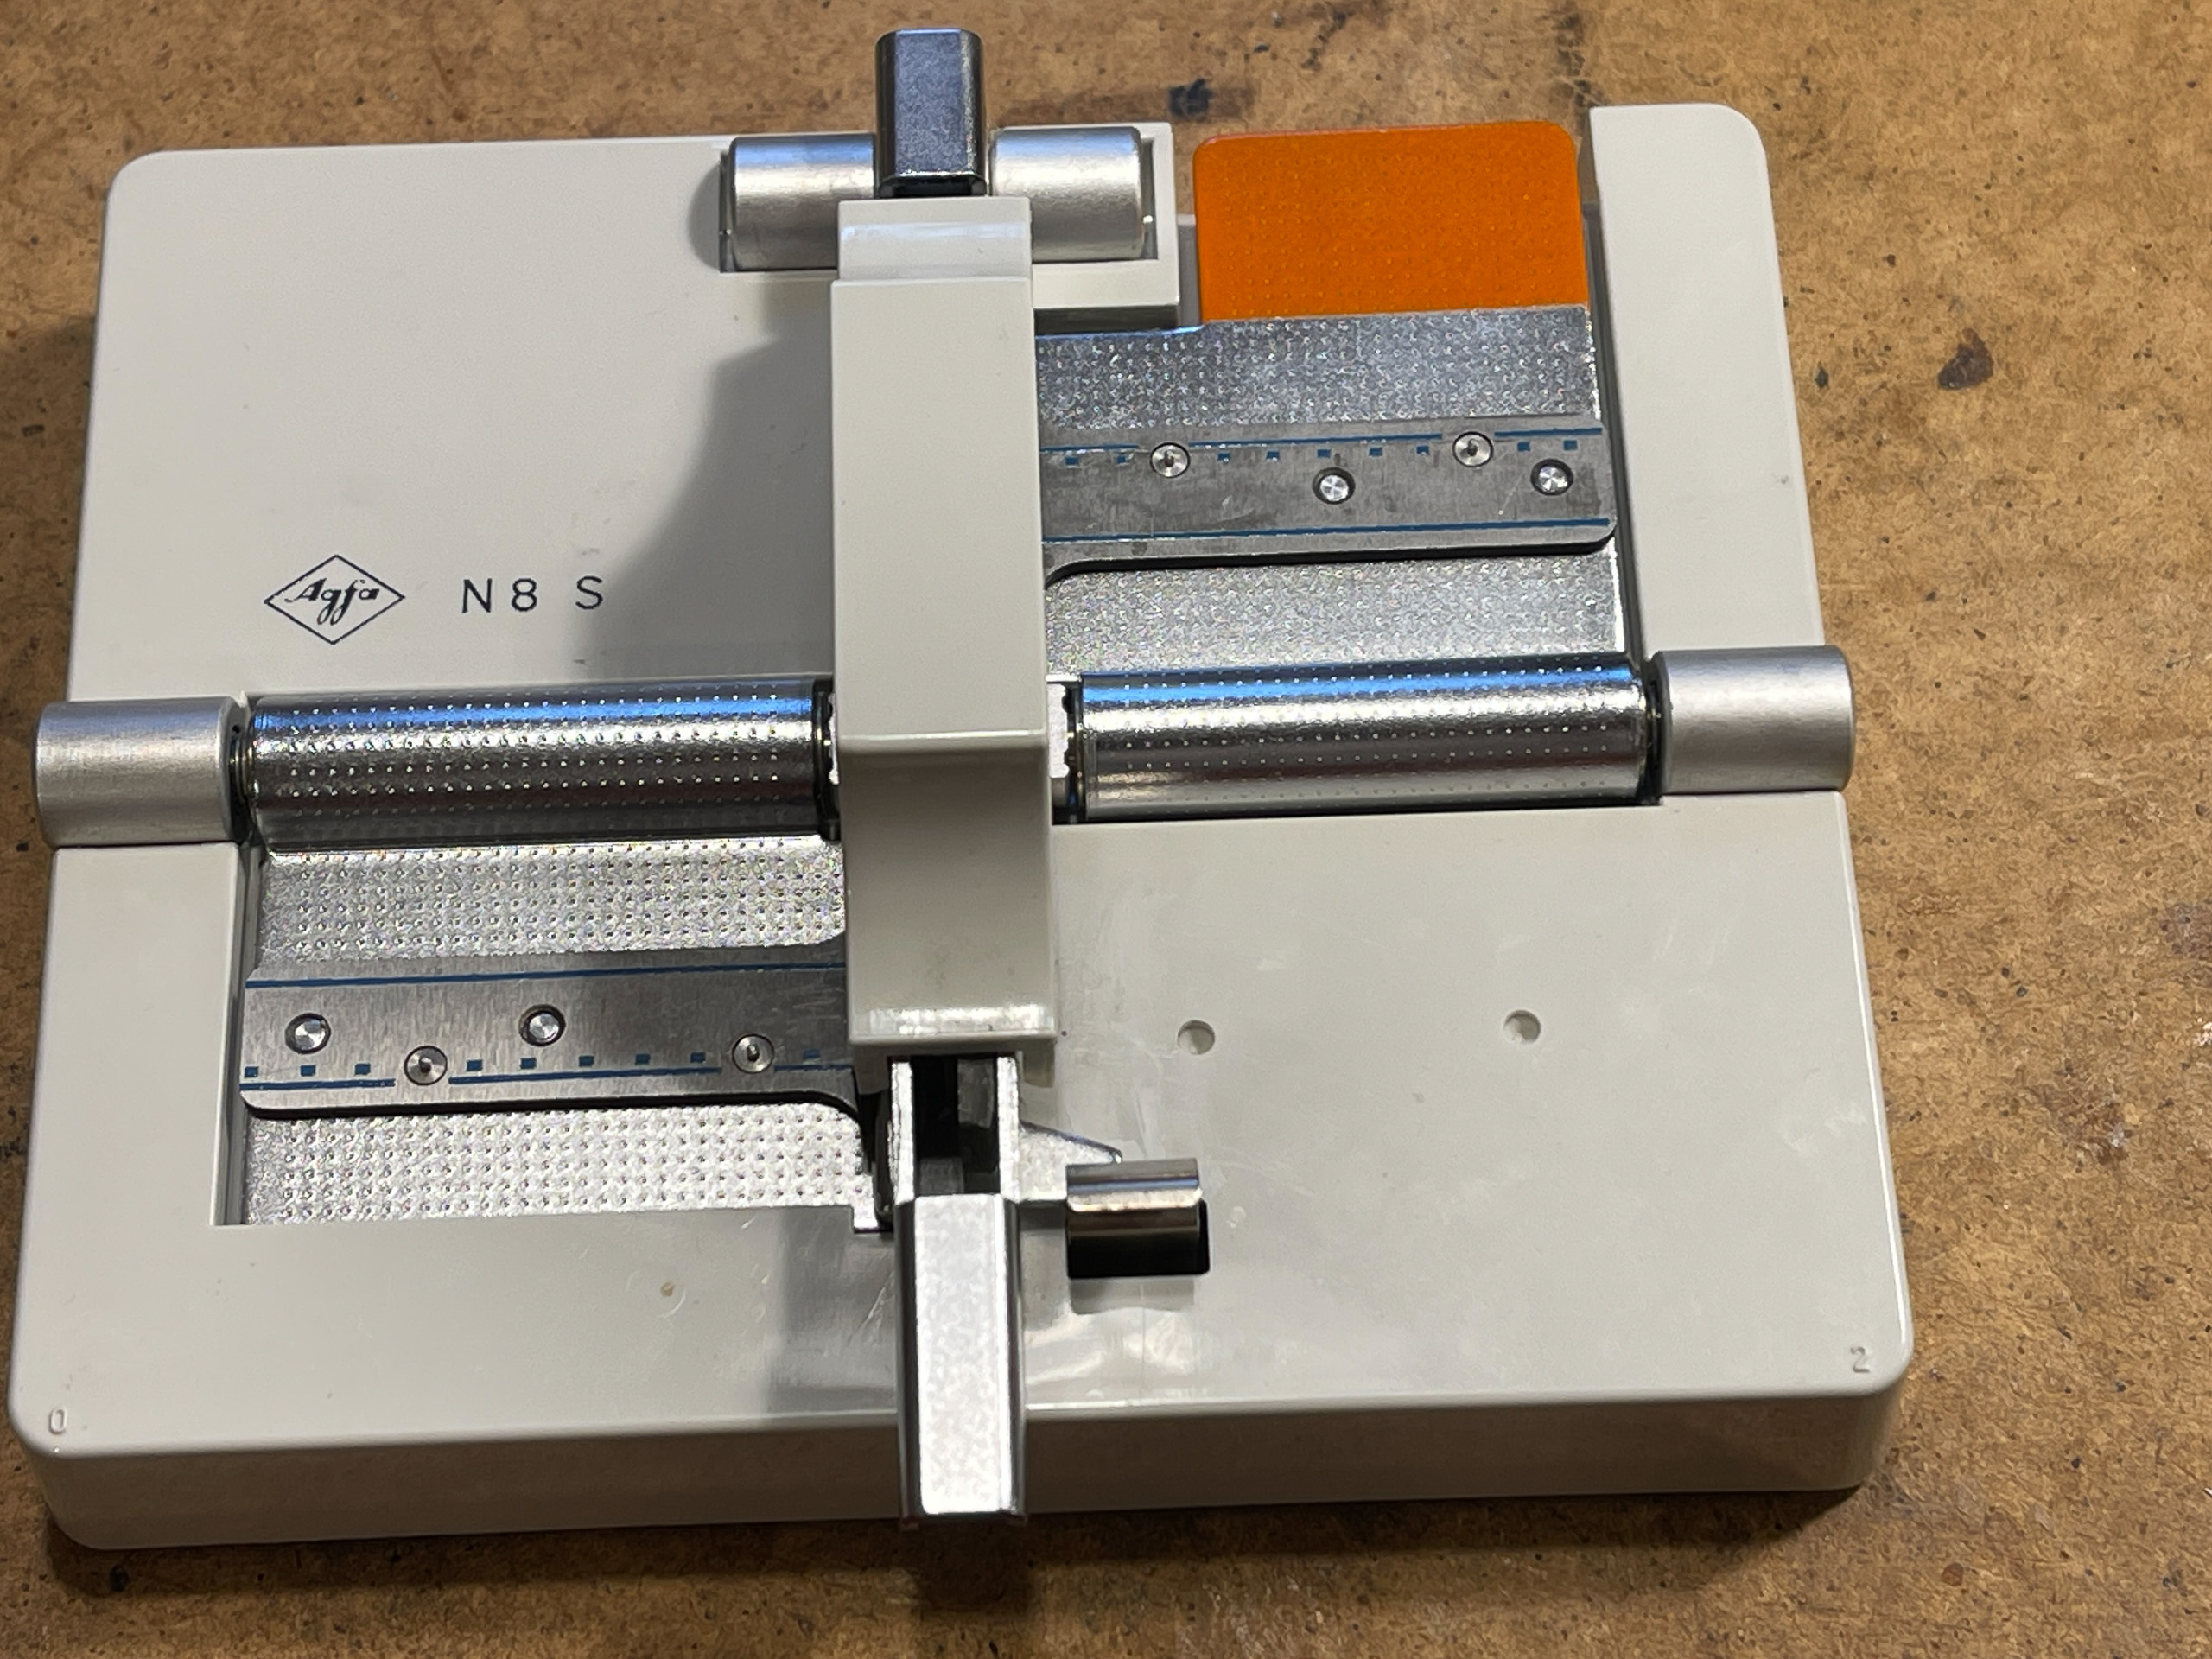 Repair of an Agfa N8S film splicer